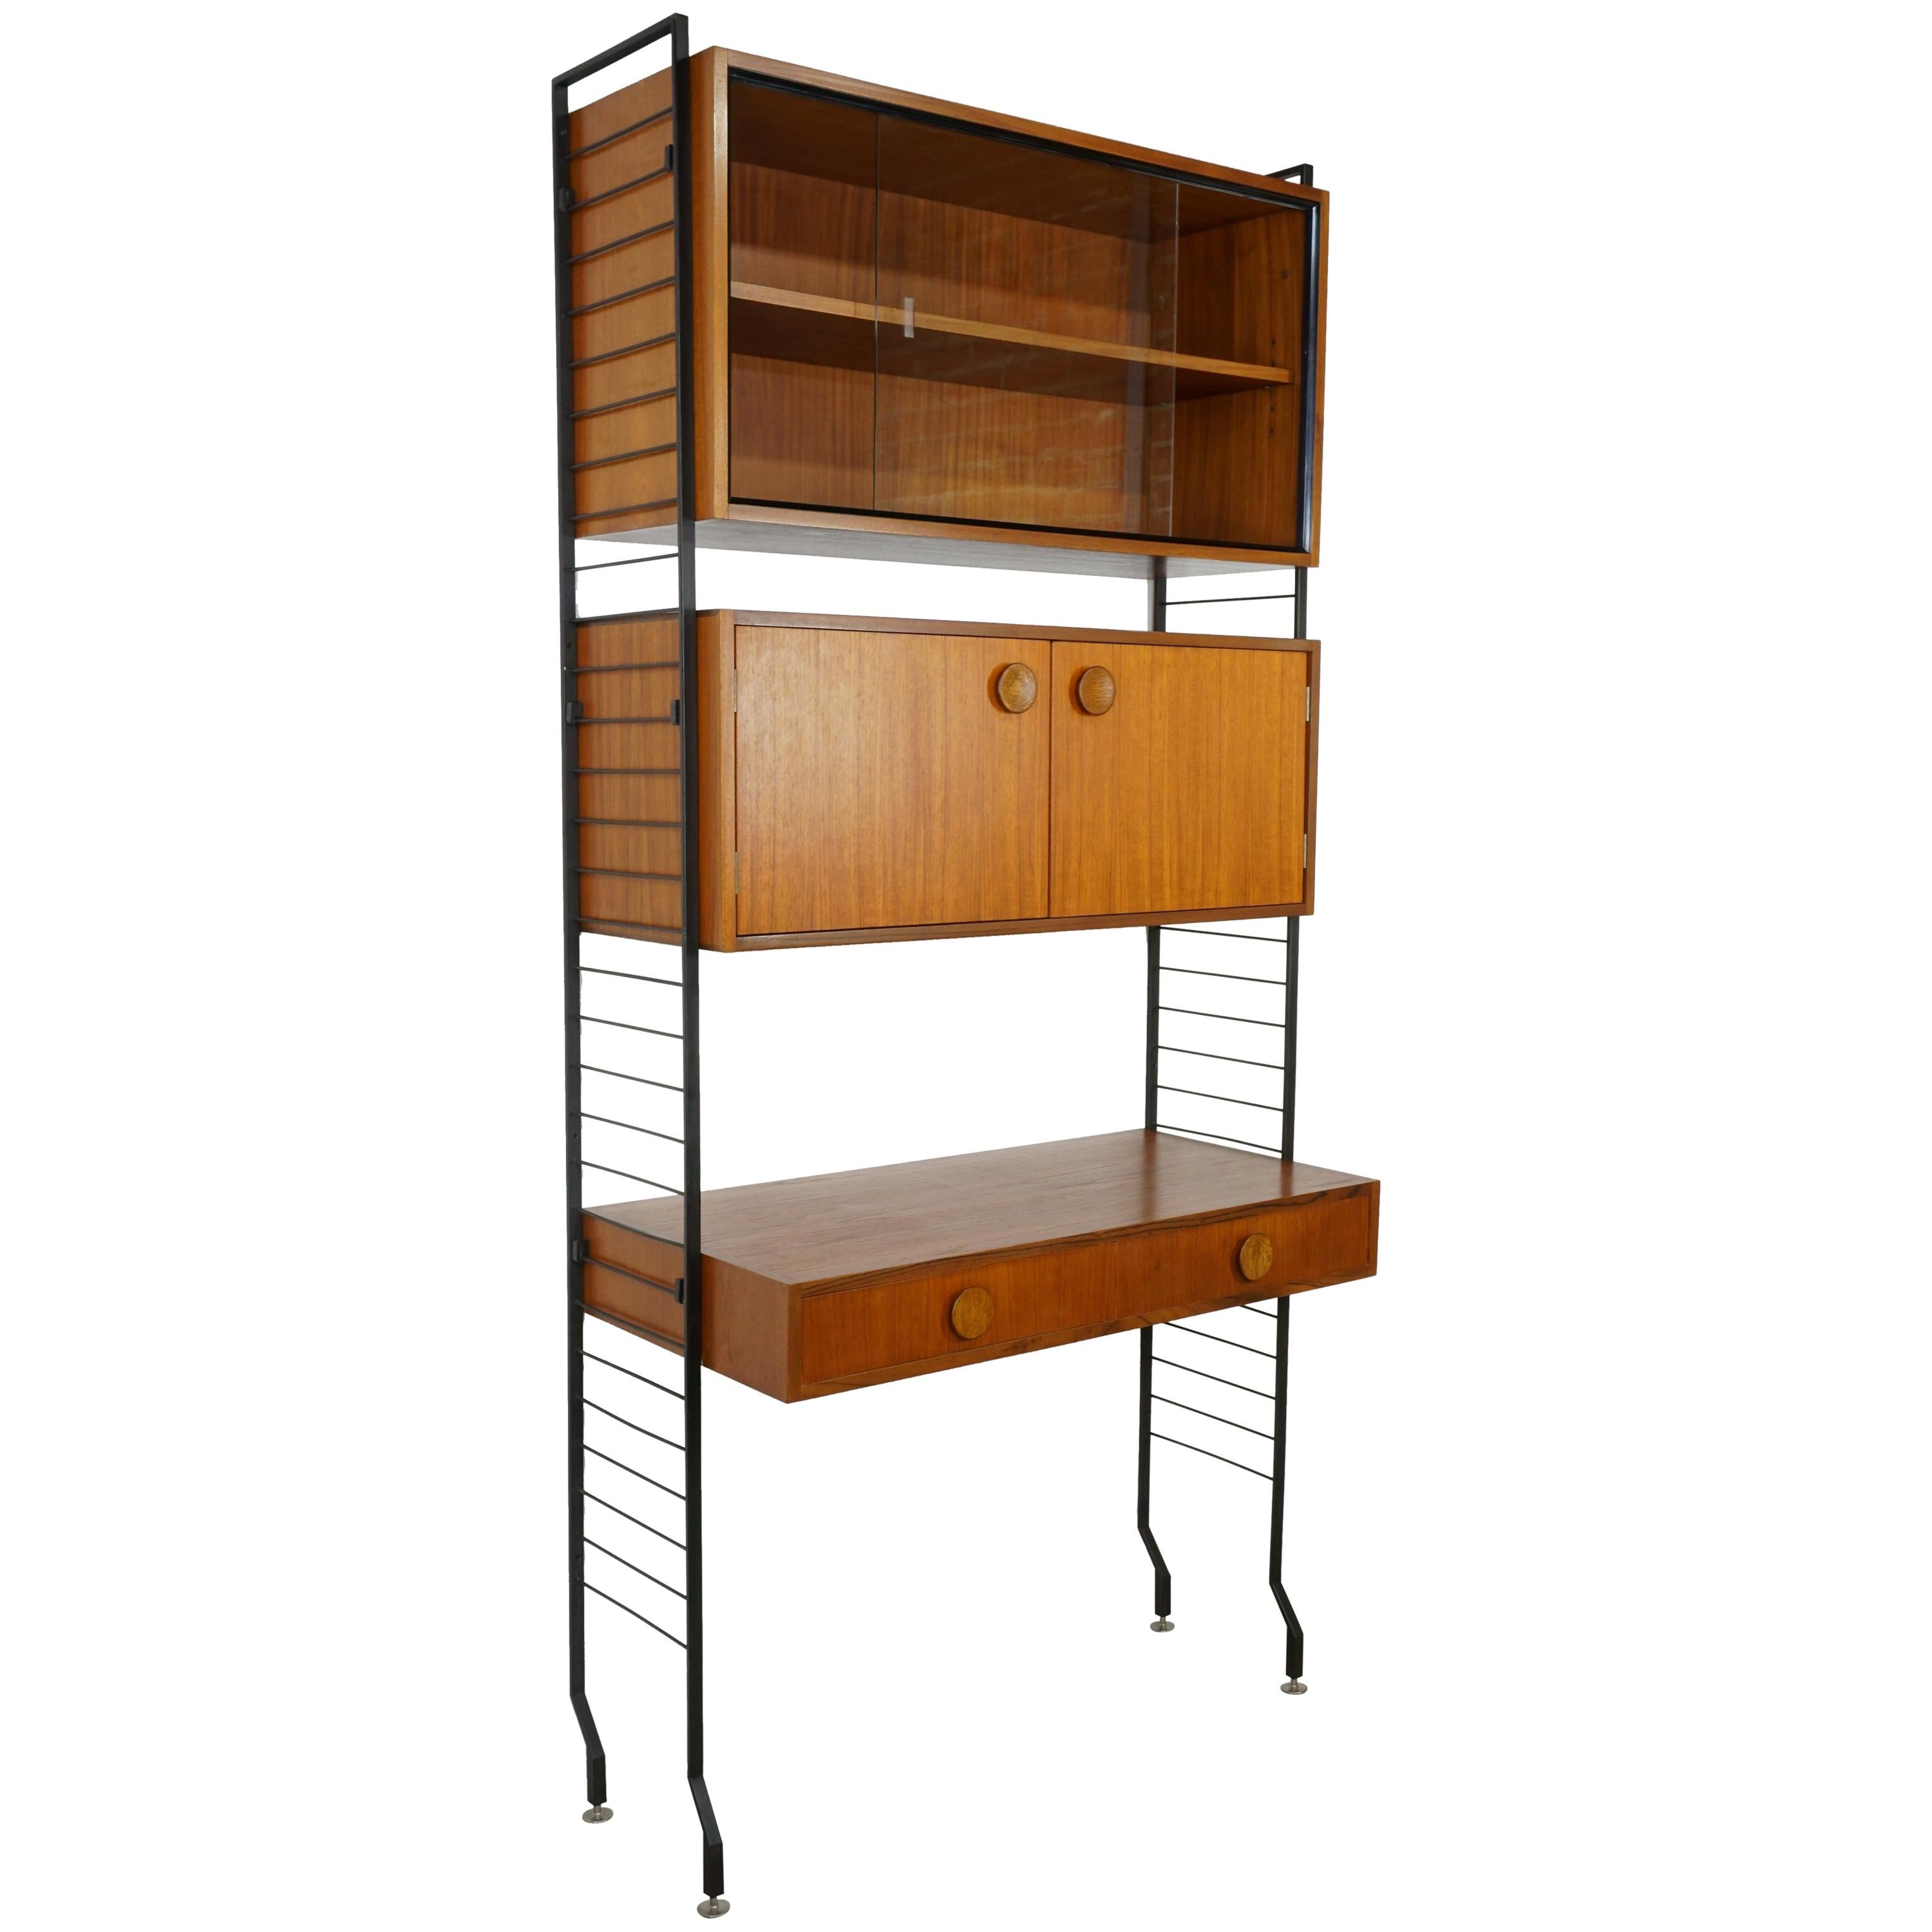 1950s Design Teak Wooden and Black Metal Wall Unit Shelves or Cabinet